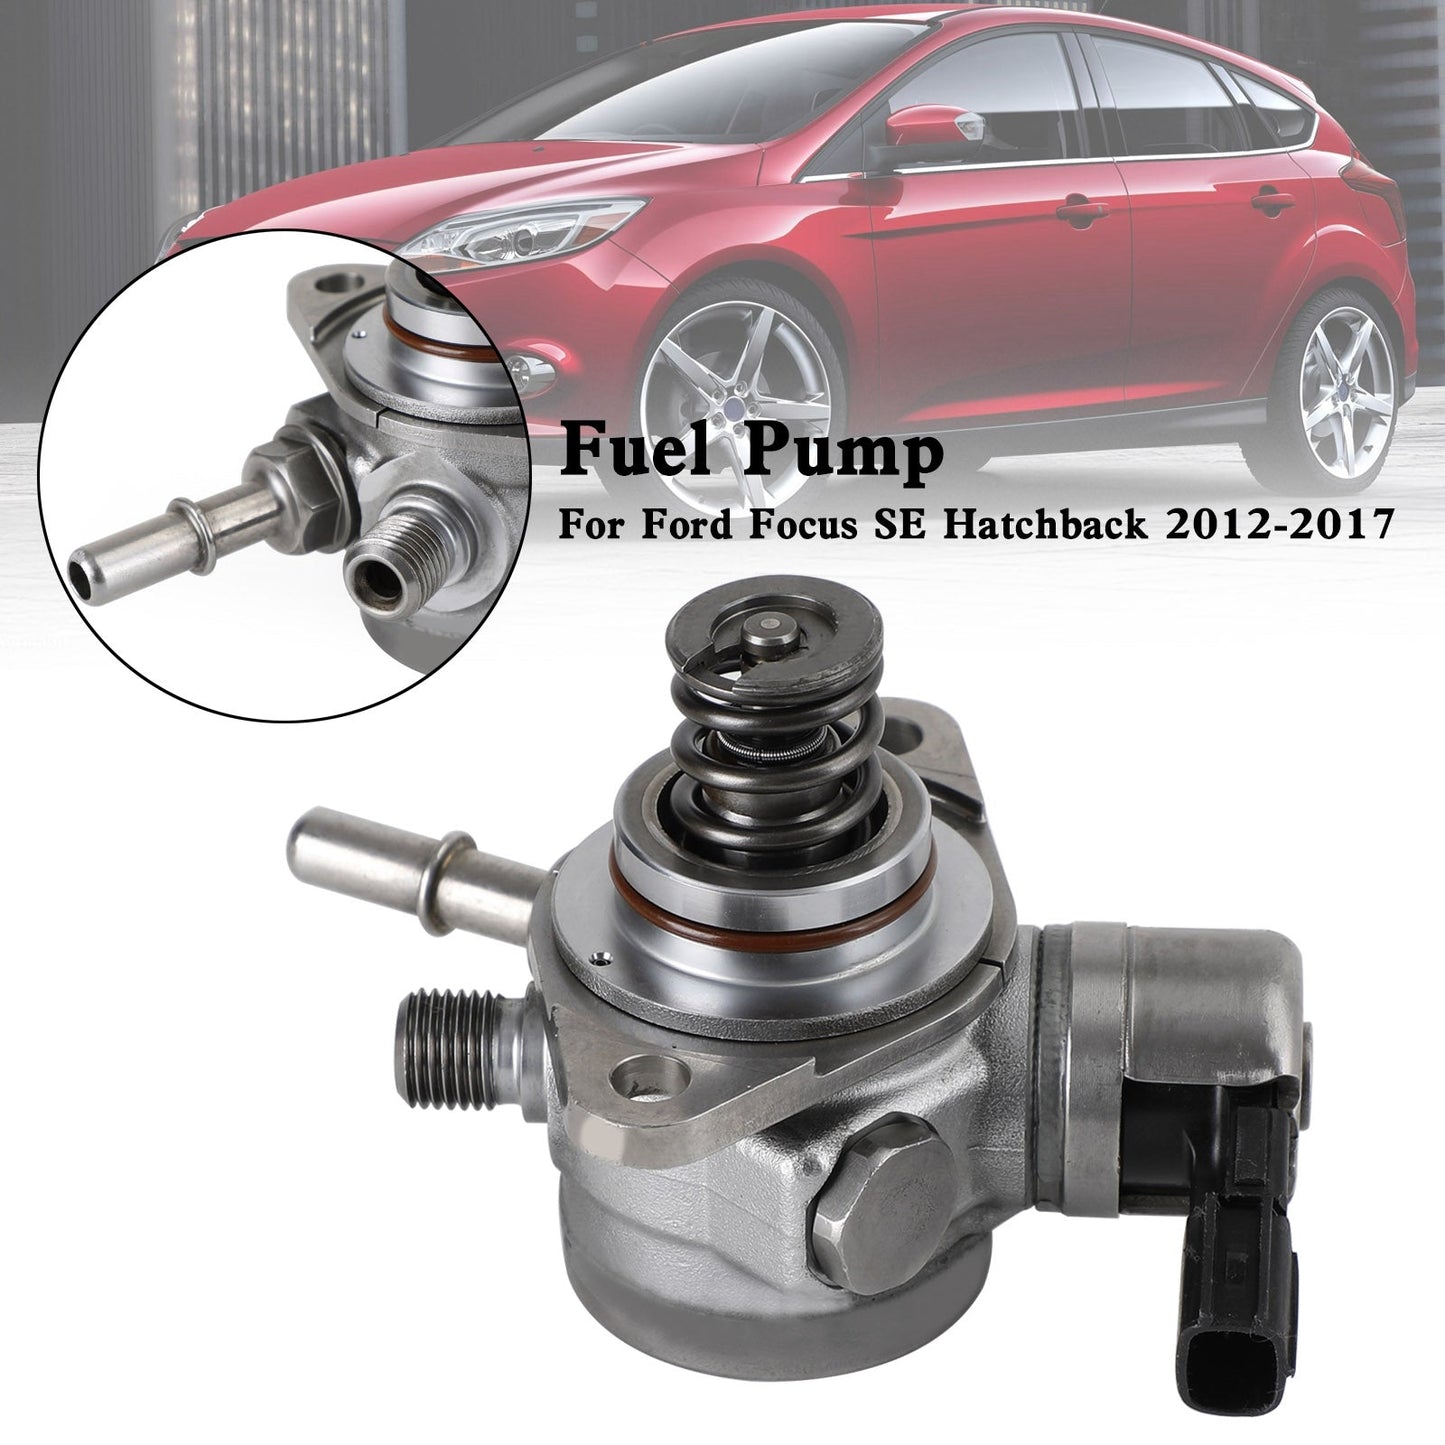 2014 Ford Focus Ambiente Trend High Pressure Fuel Pump CM5E-9D376-CB